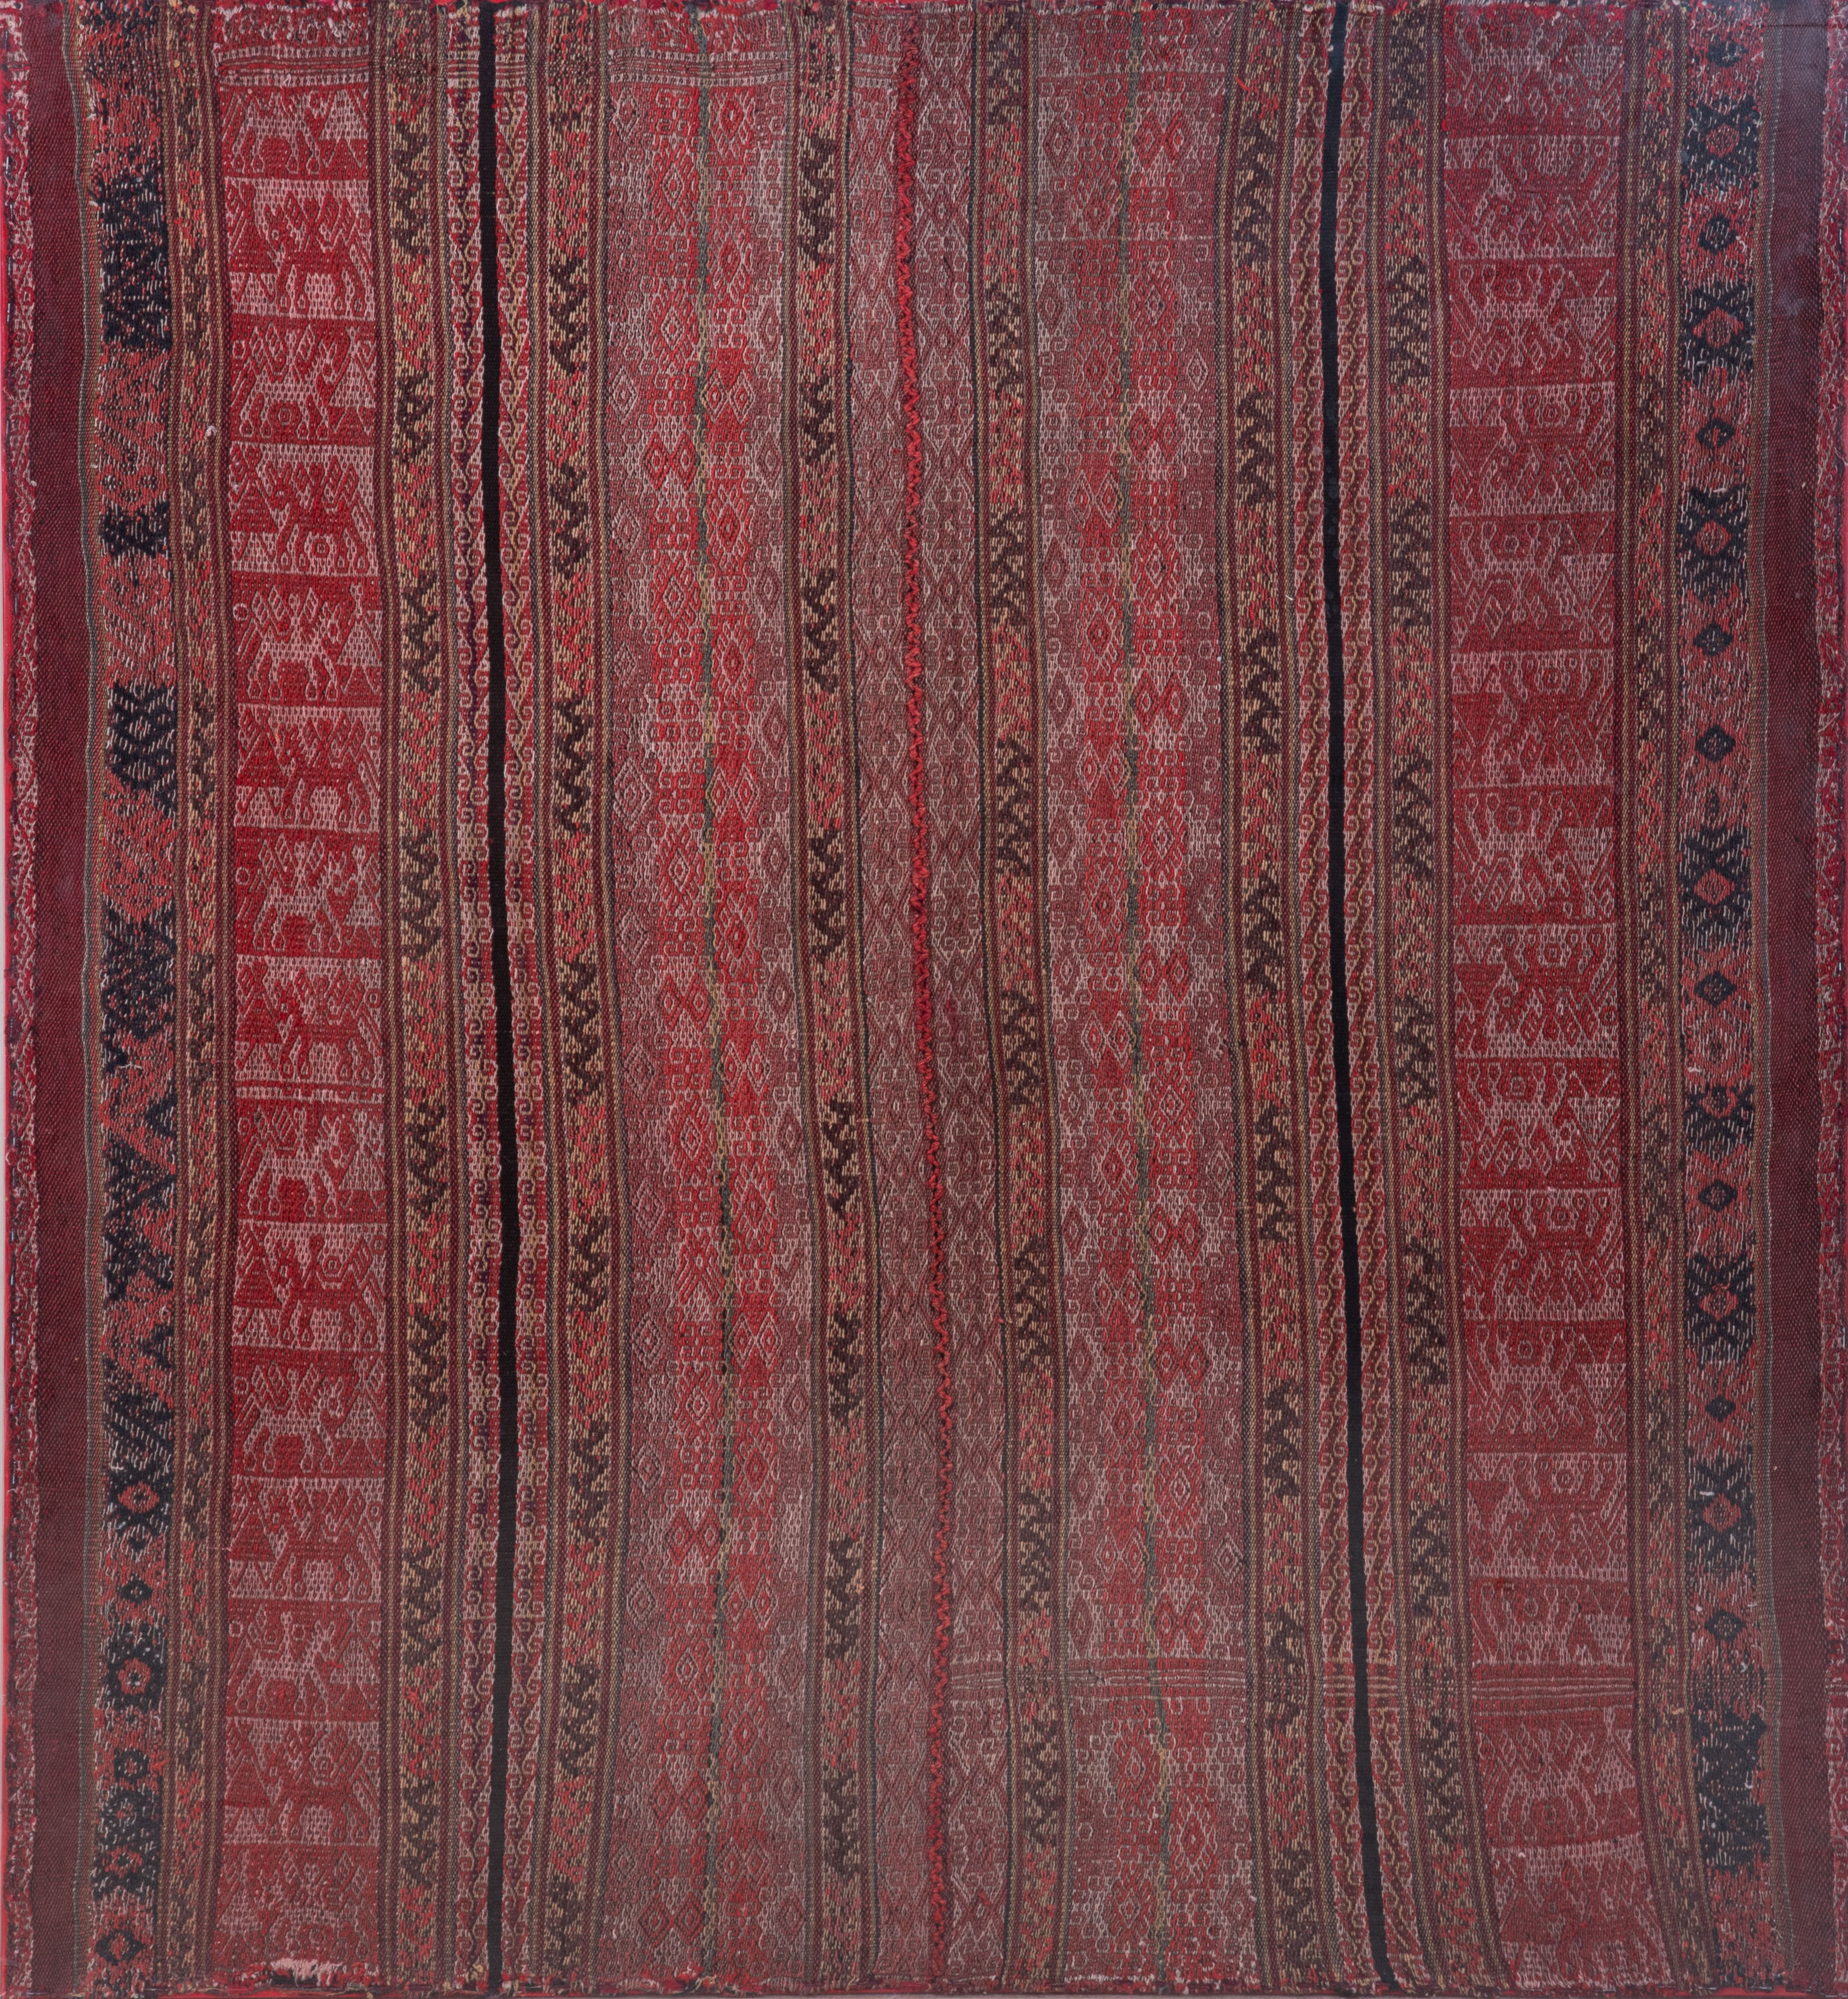 Framed Middle Eastern wool weaving  3b1c75